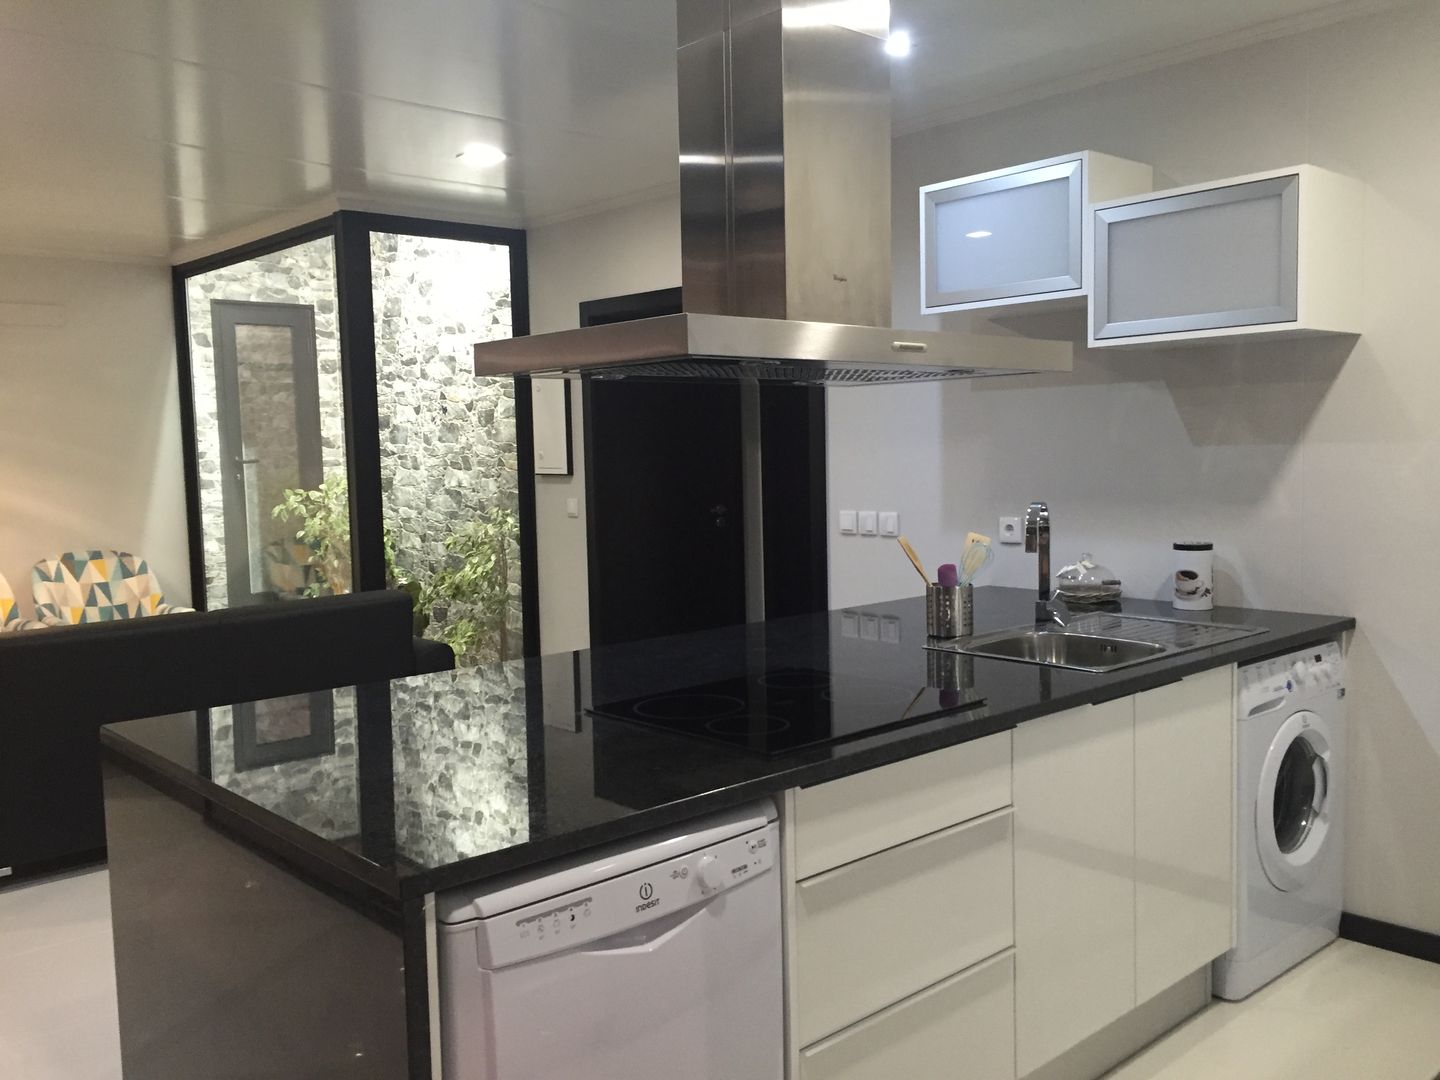 Casa modular com 2 quartos e jardim interior, KITUR KITUR Minimalist kitchen